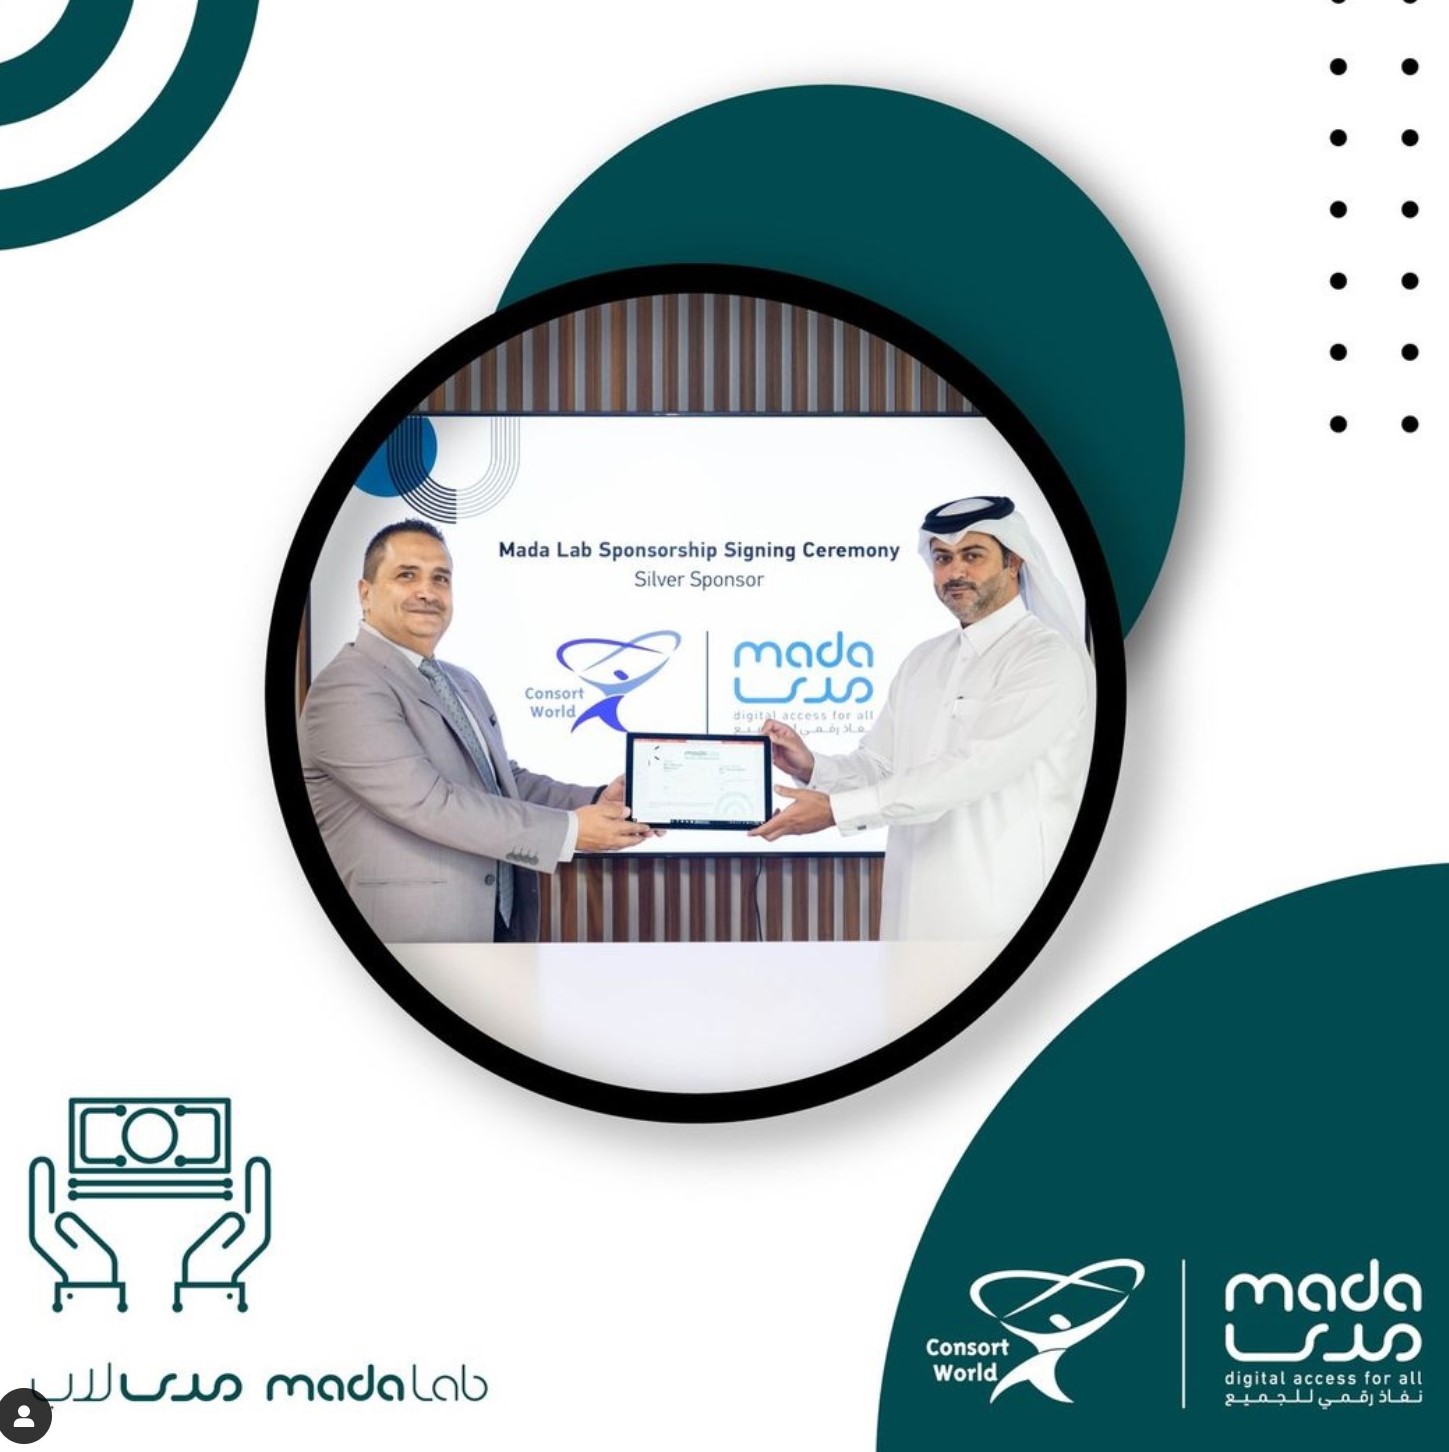 Consort World signs sponsorship with Mada Lab